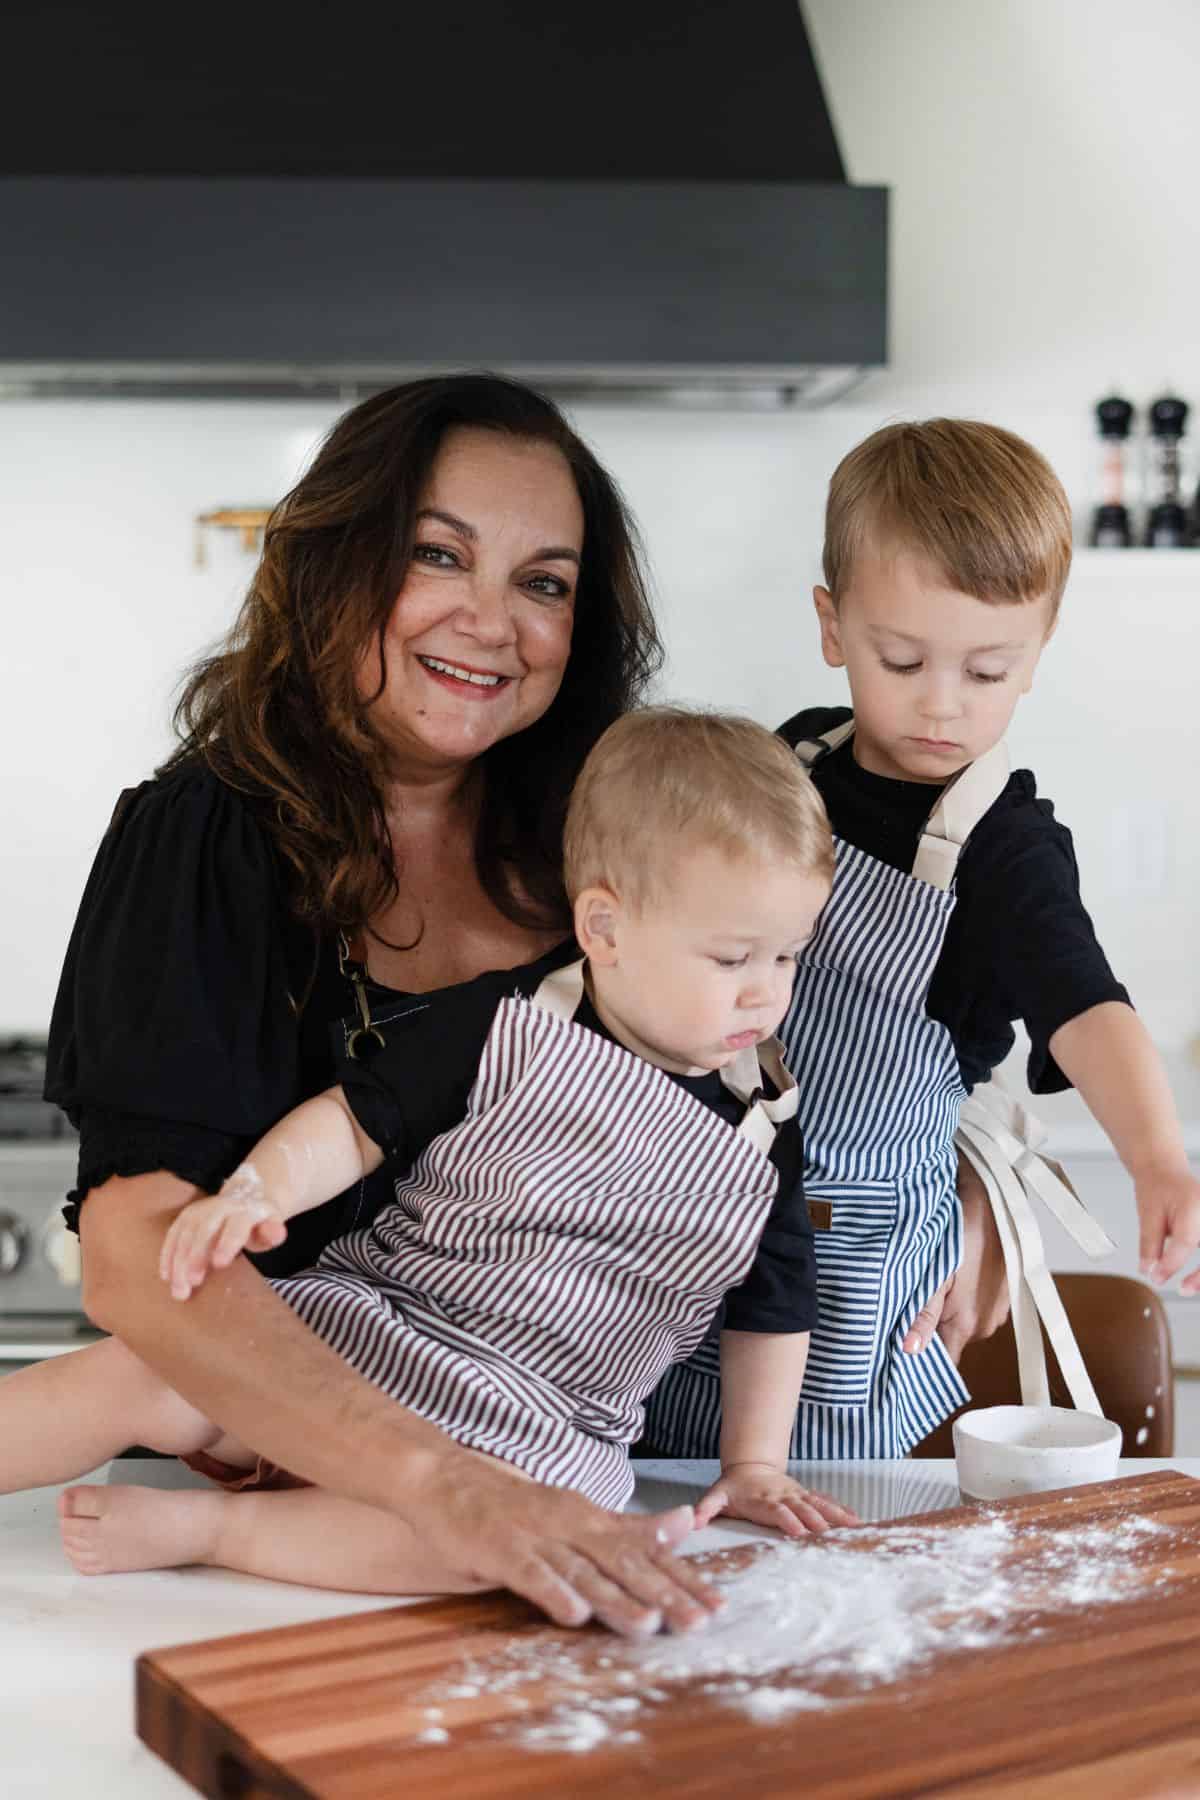 Isabel with her grandchildren making pizza twists